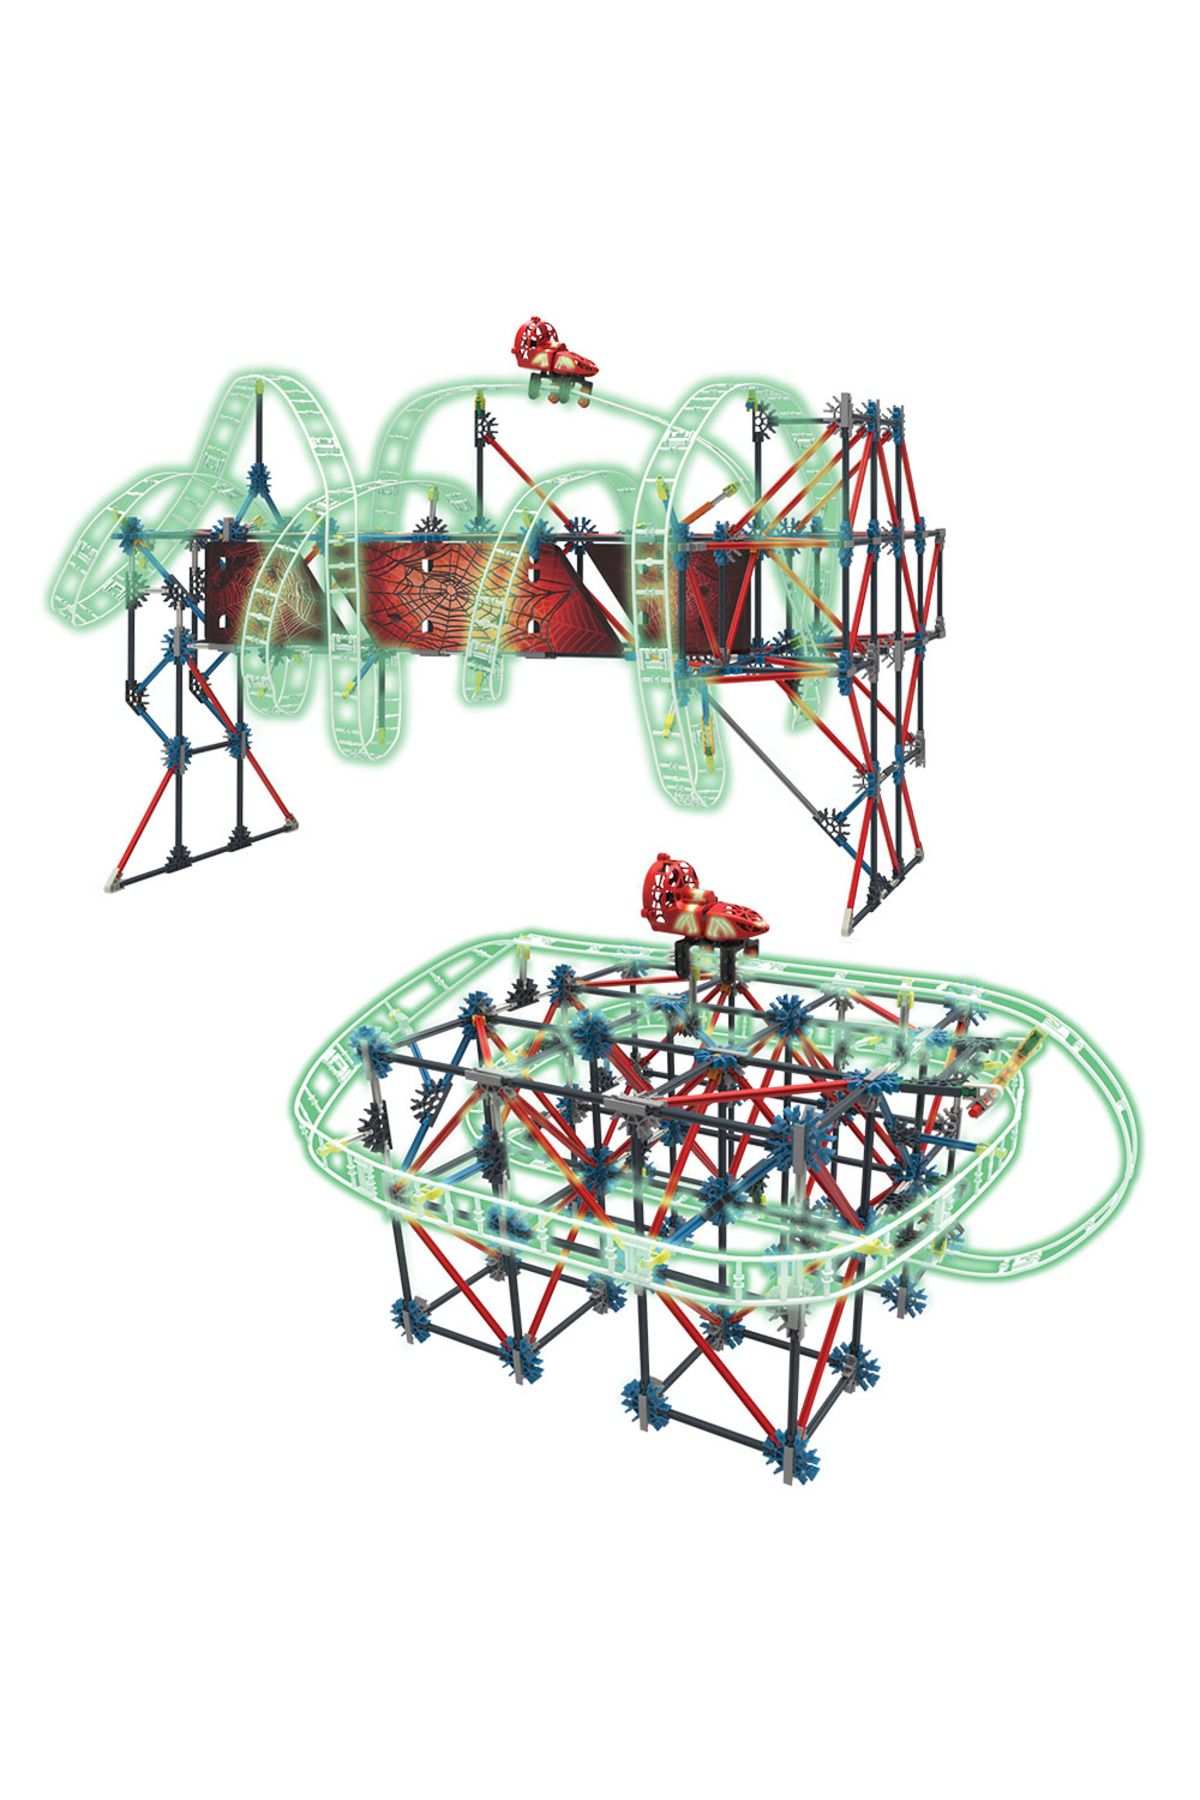 Web Weaver Roller Coaster Set (MOTORLU) Hız Treni